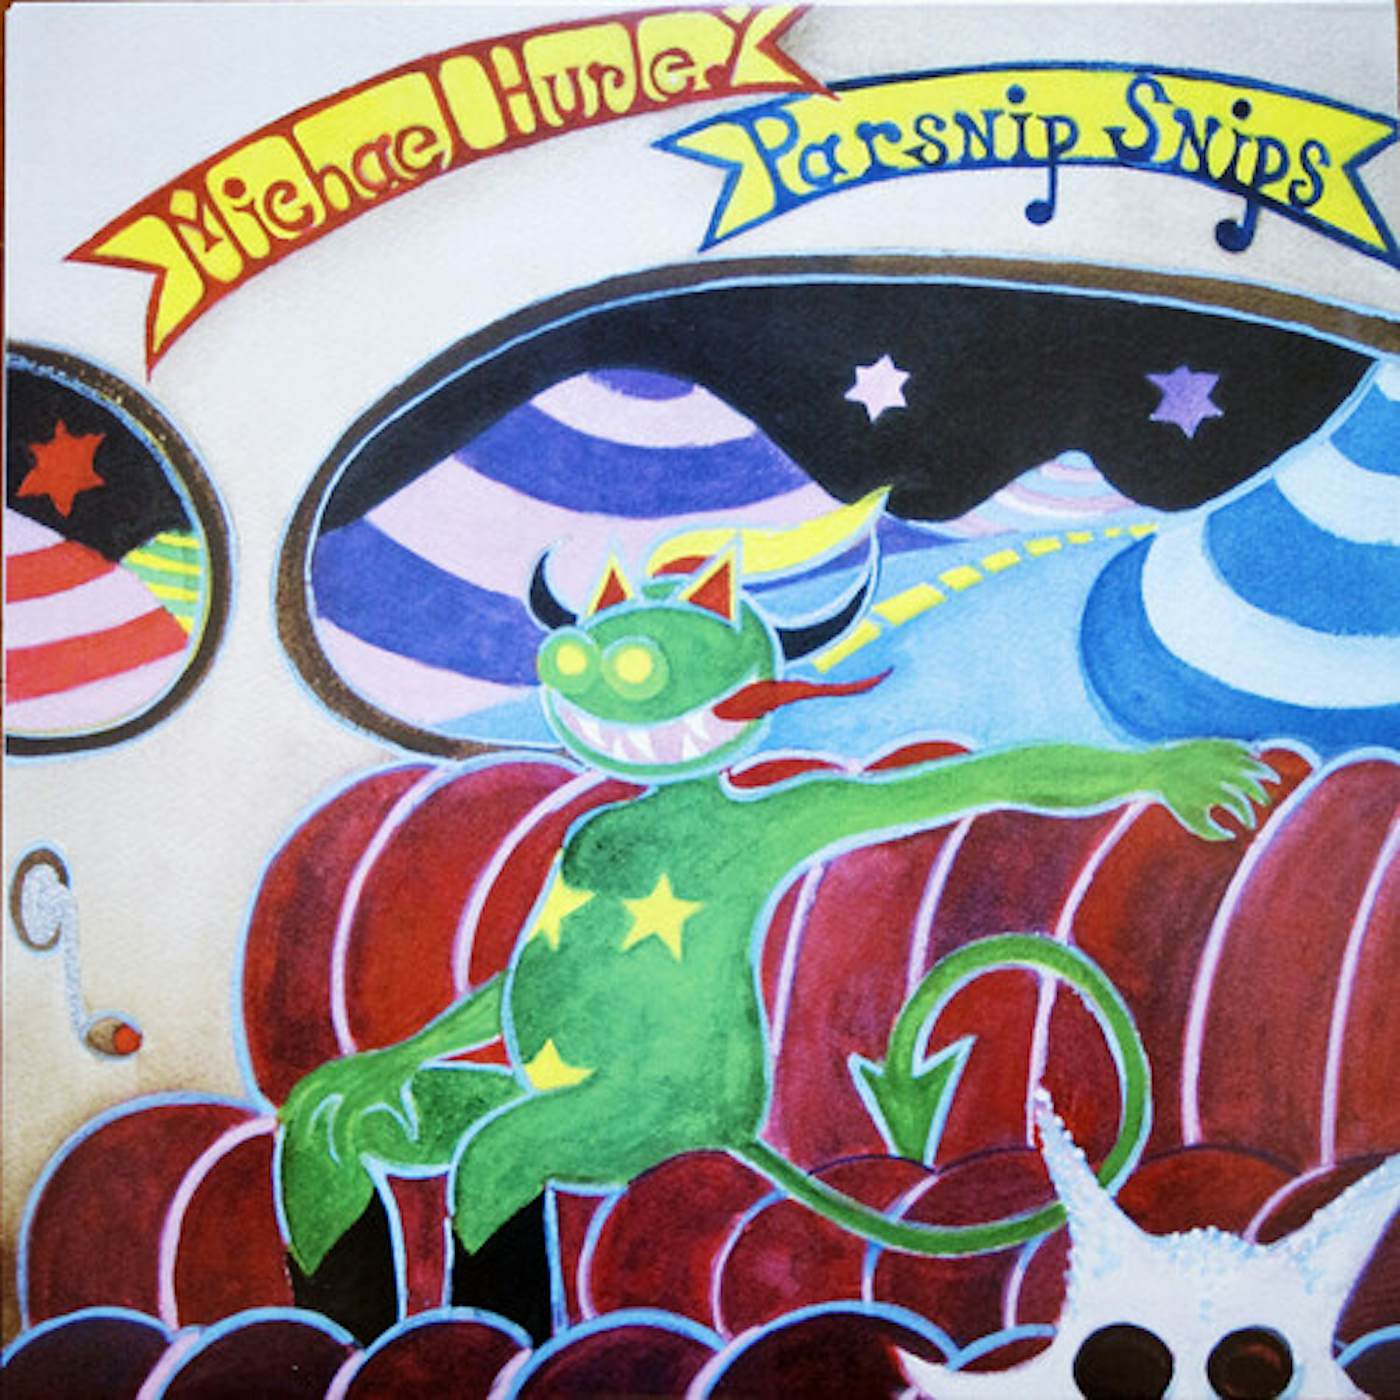 Michael Hurley Parsnip Snips Vinyl Record